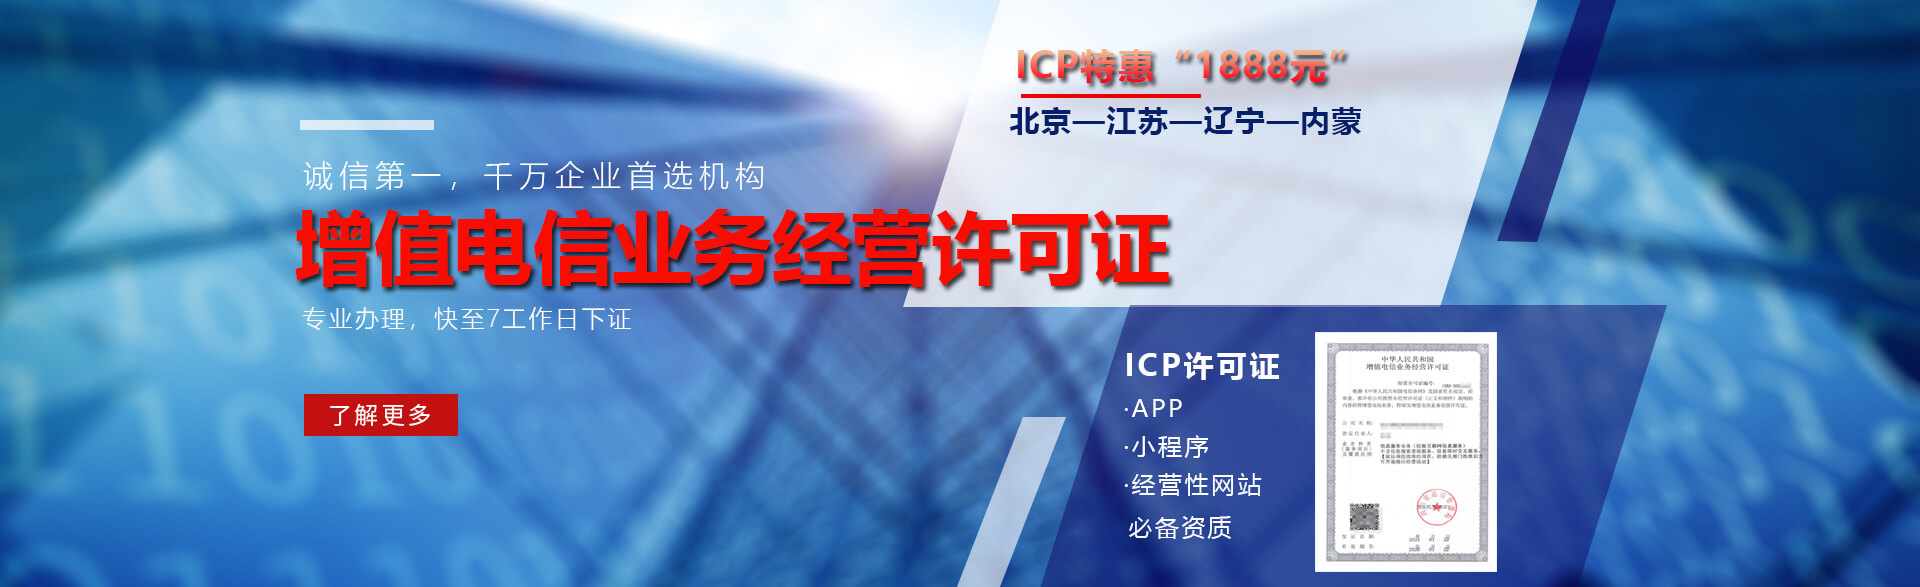 ICP許可證